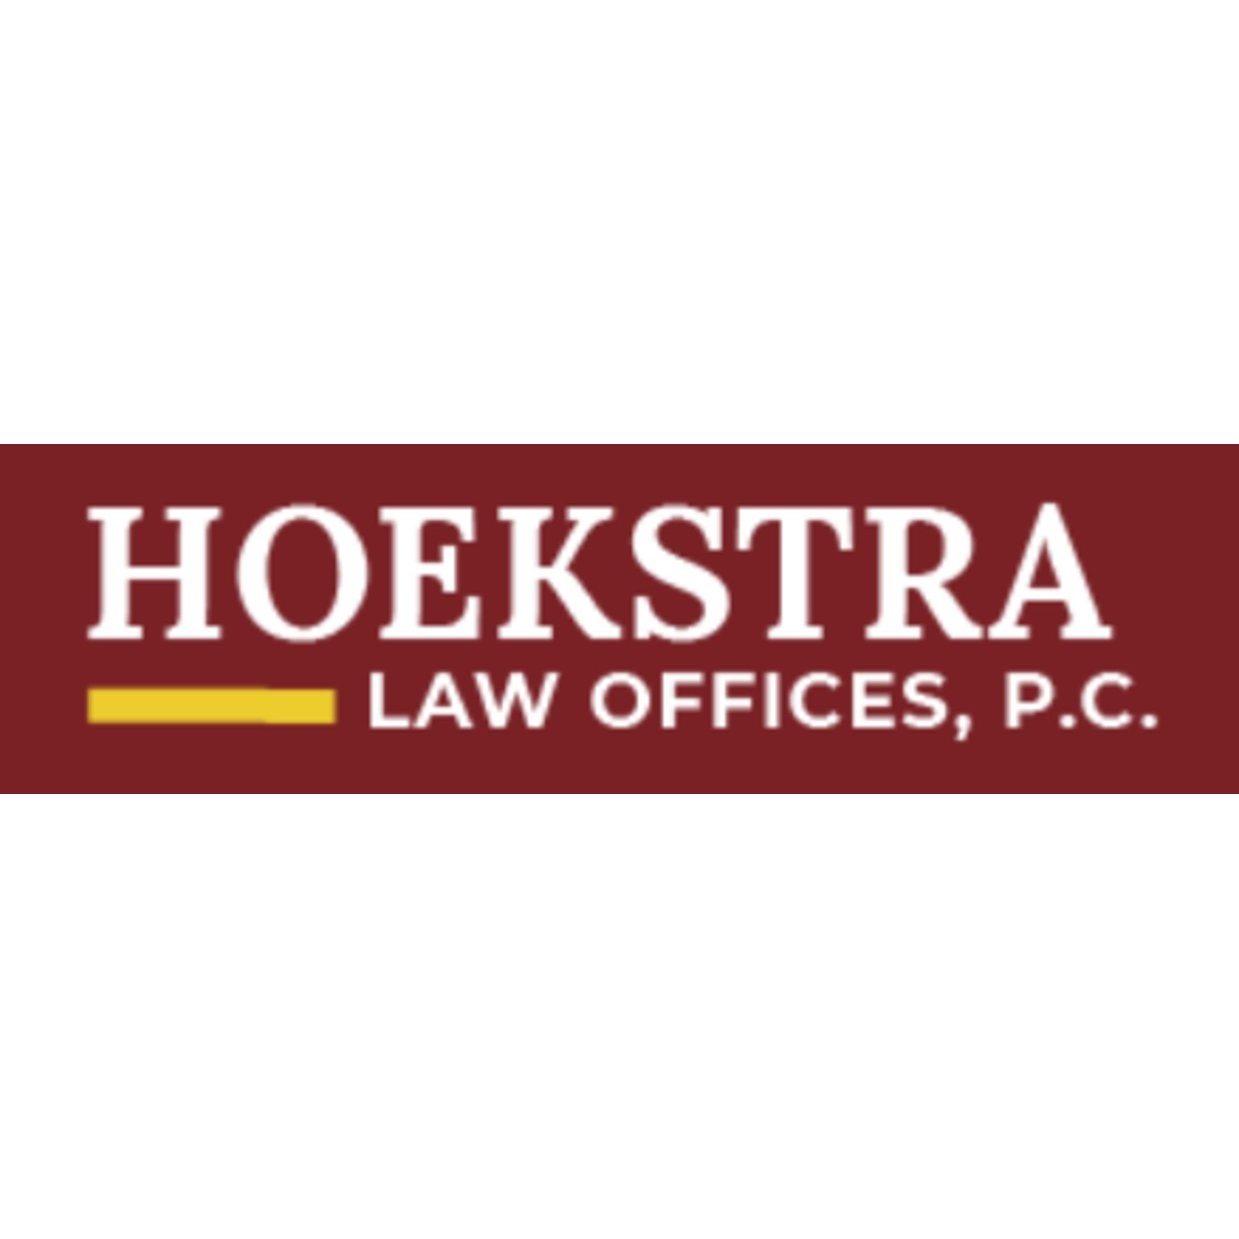 Hoekstra Law Offices, P.C. - Bloomington, IL 61704 - (309)808-1496 | ShowMeLocal.com